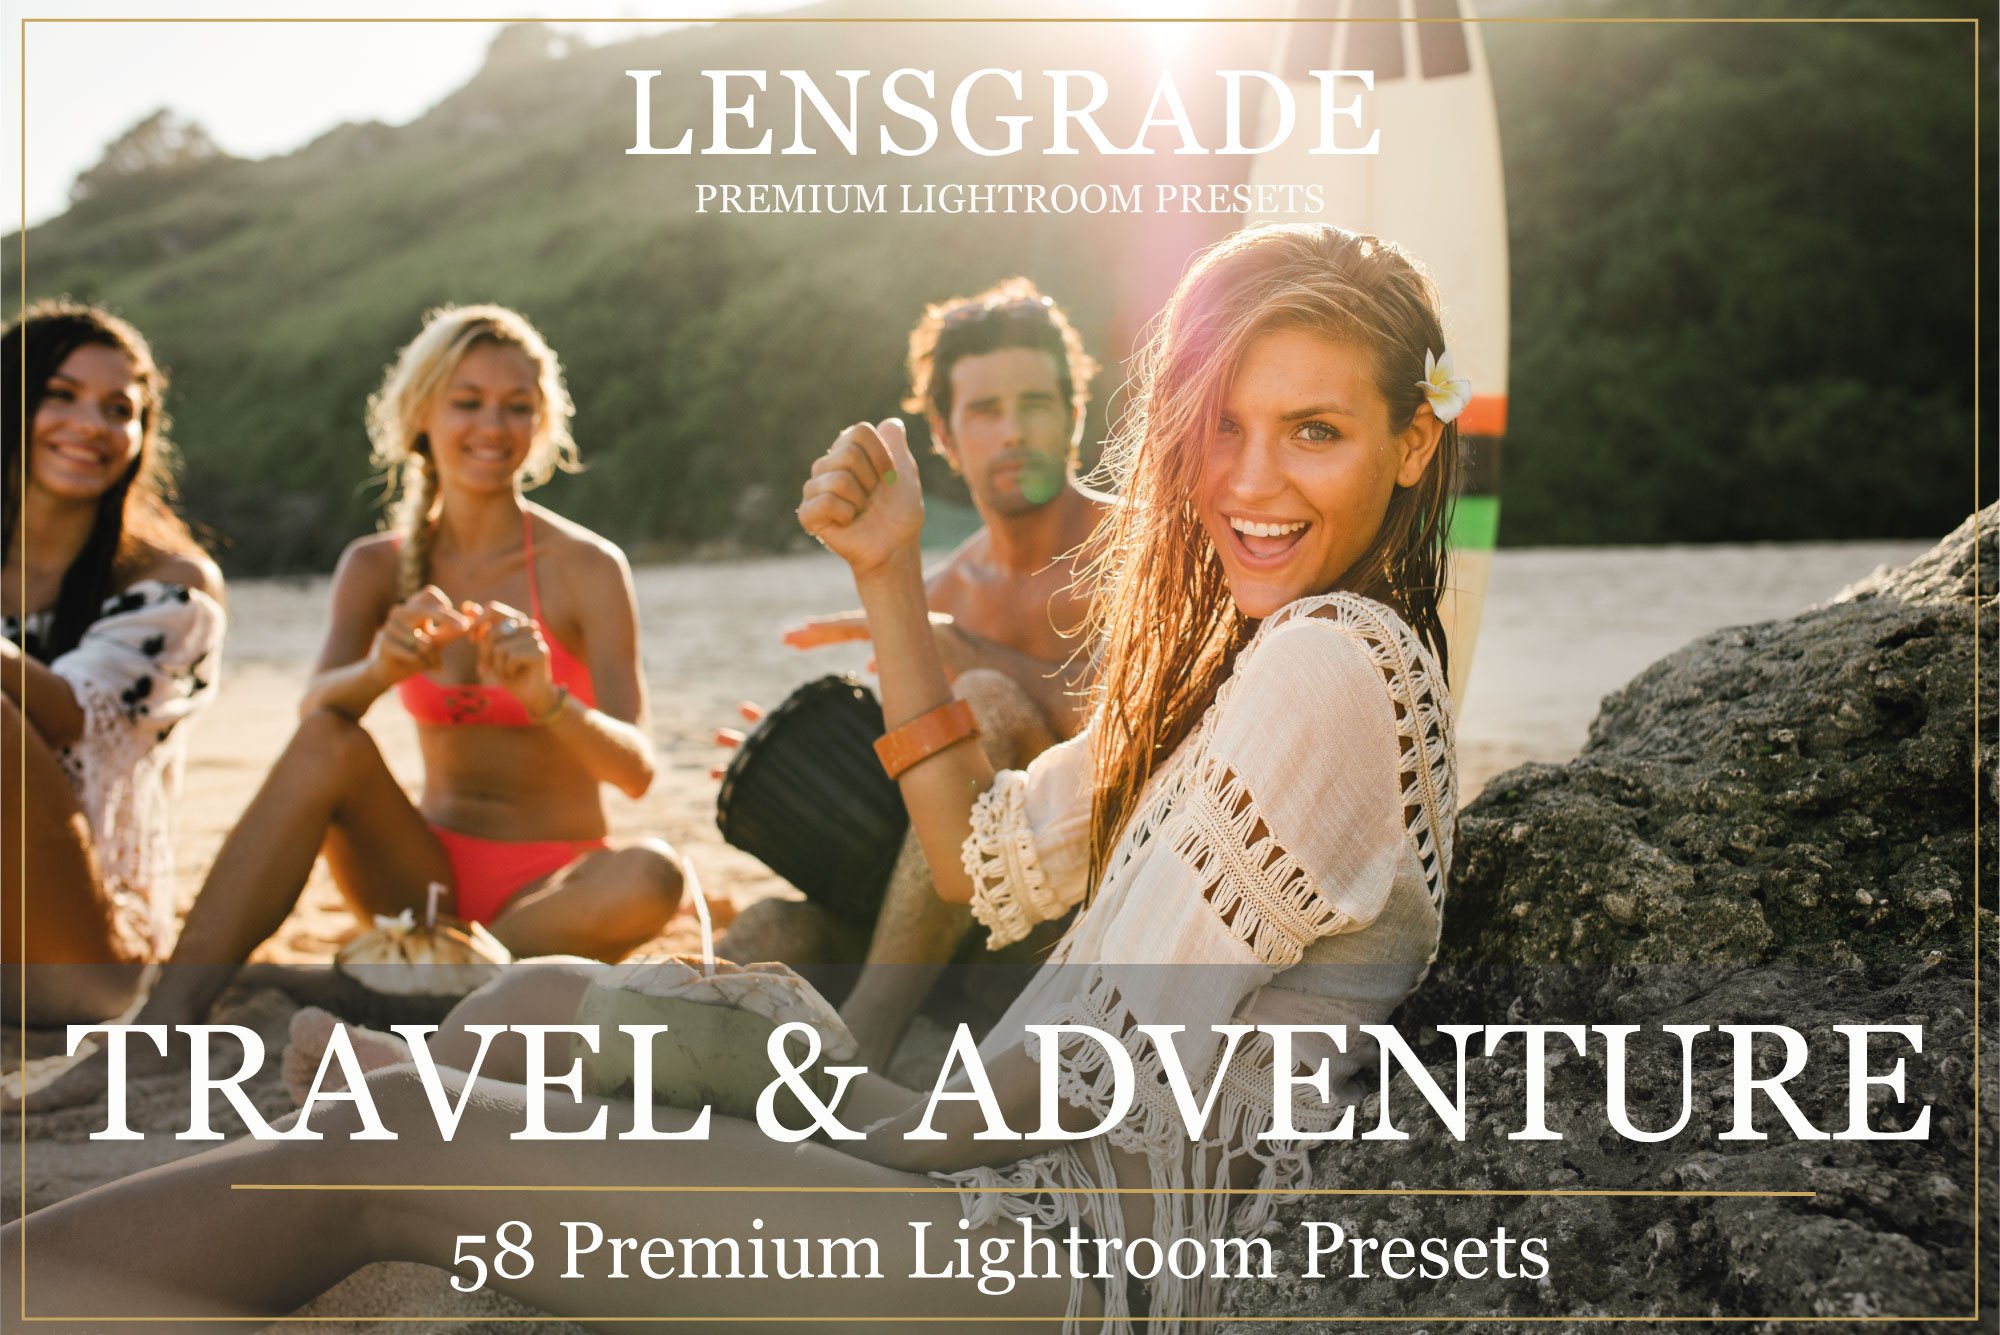 Travel & Adventure Lightroom Presetscover image.